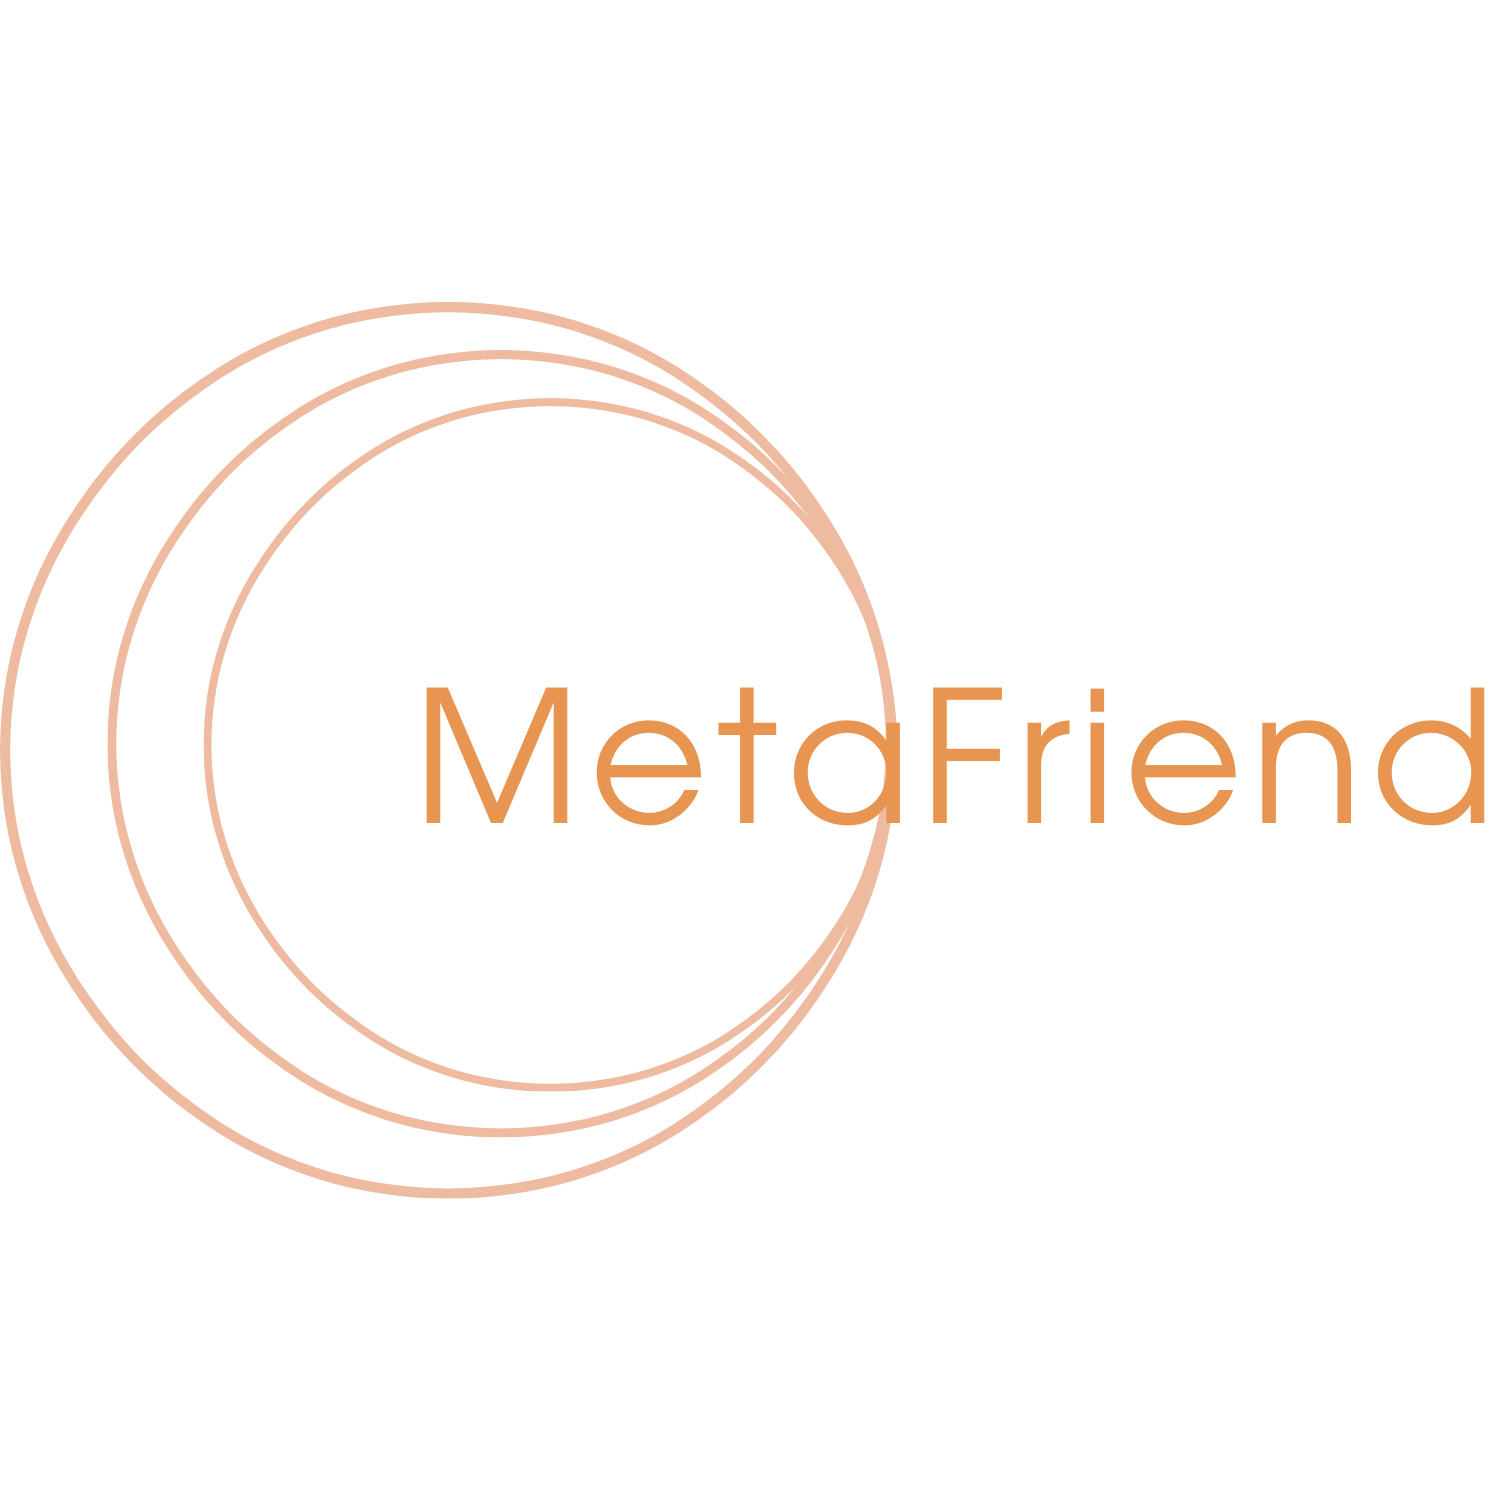 MetaFriend placeholder logotype